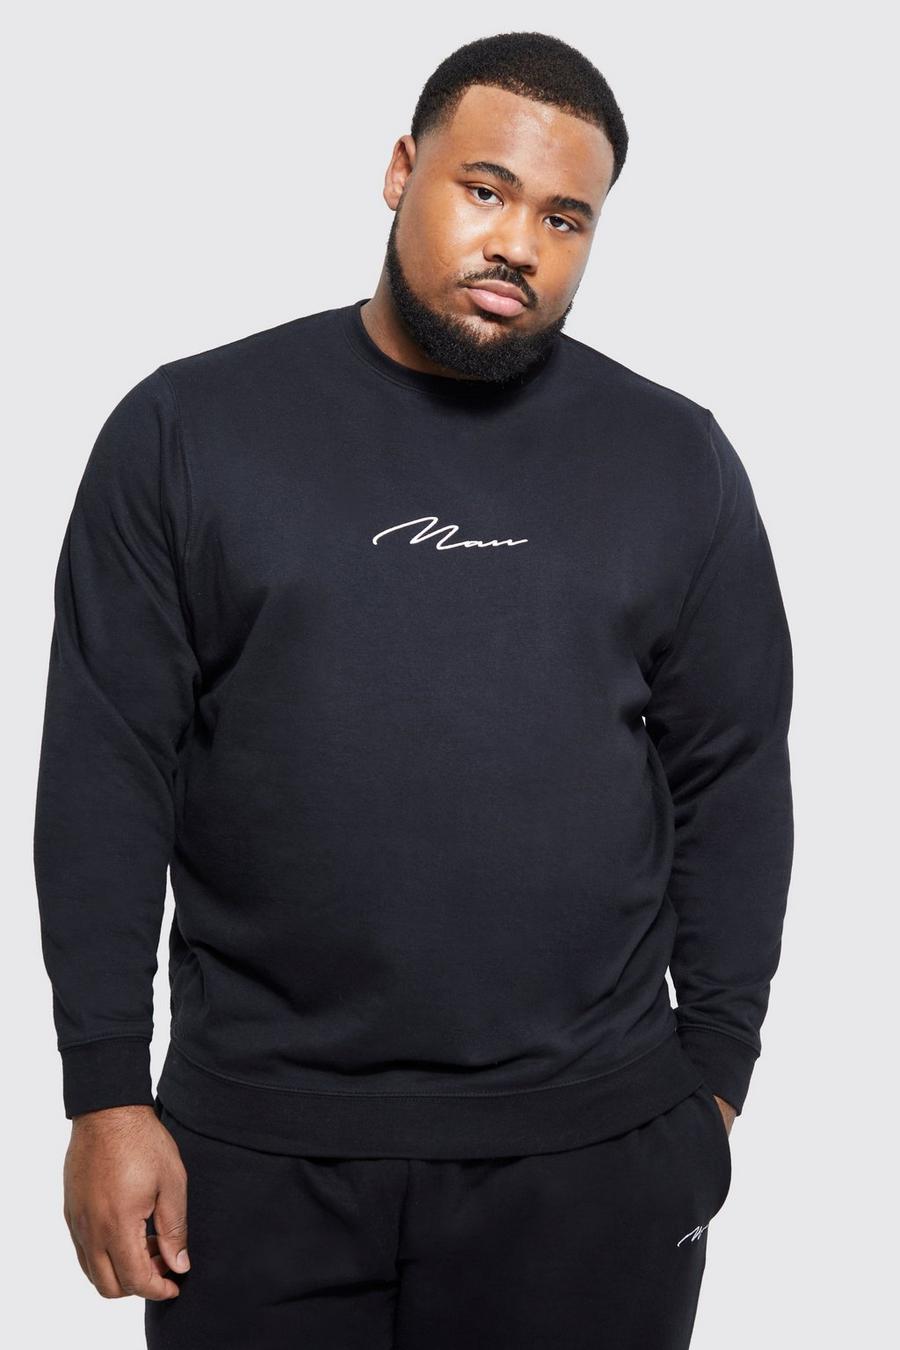 Plus Man Signature Embroidered Sweatshirt, Black nero